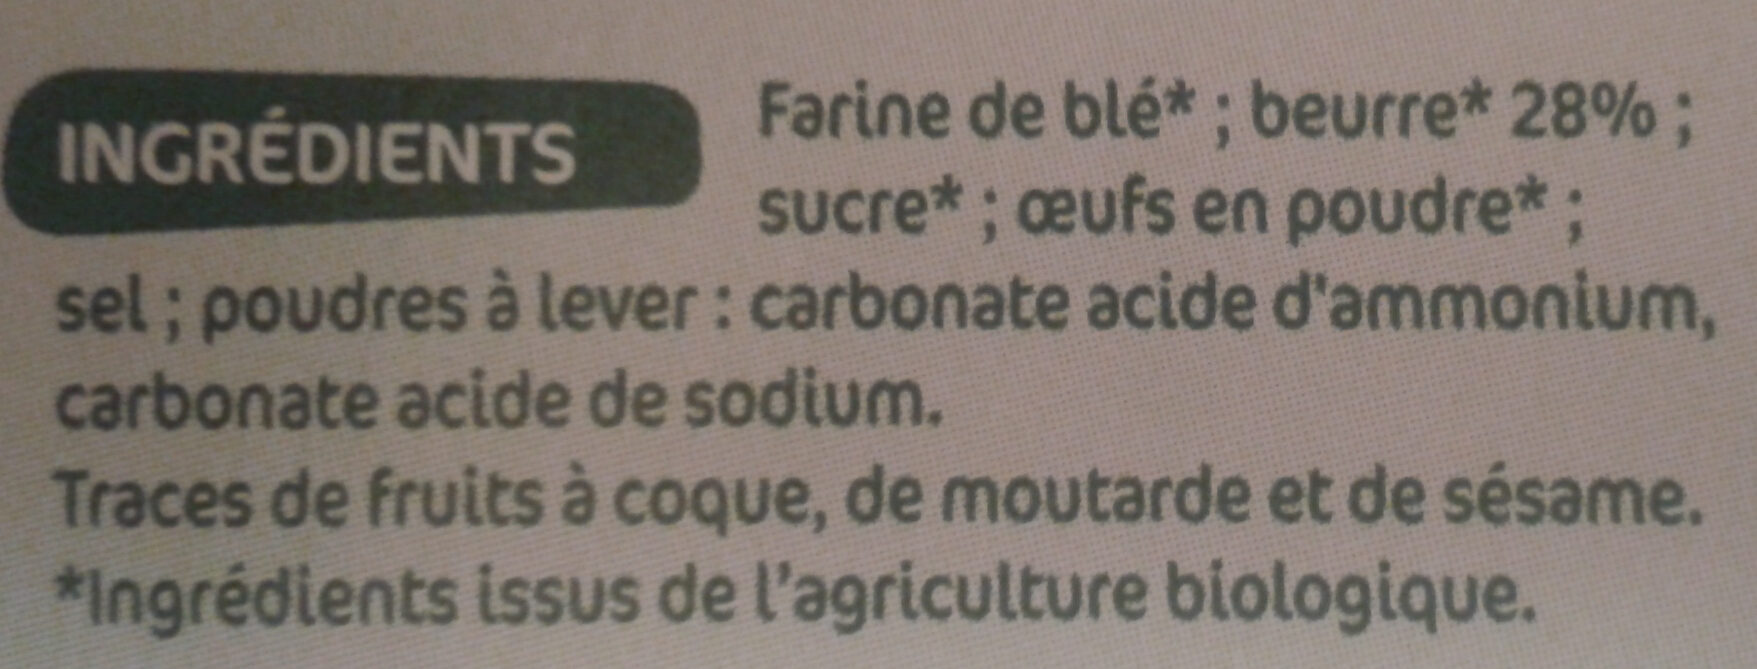 Galette pur beurre - Ingredienser - fr